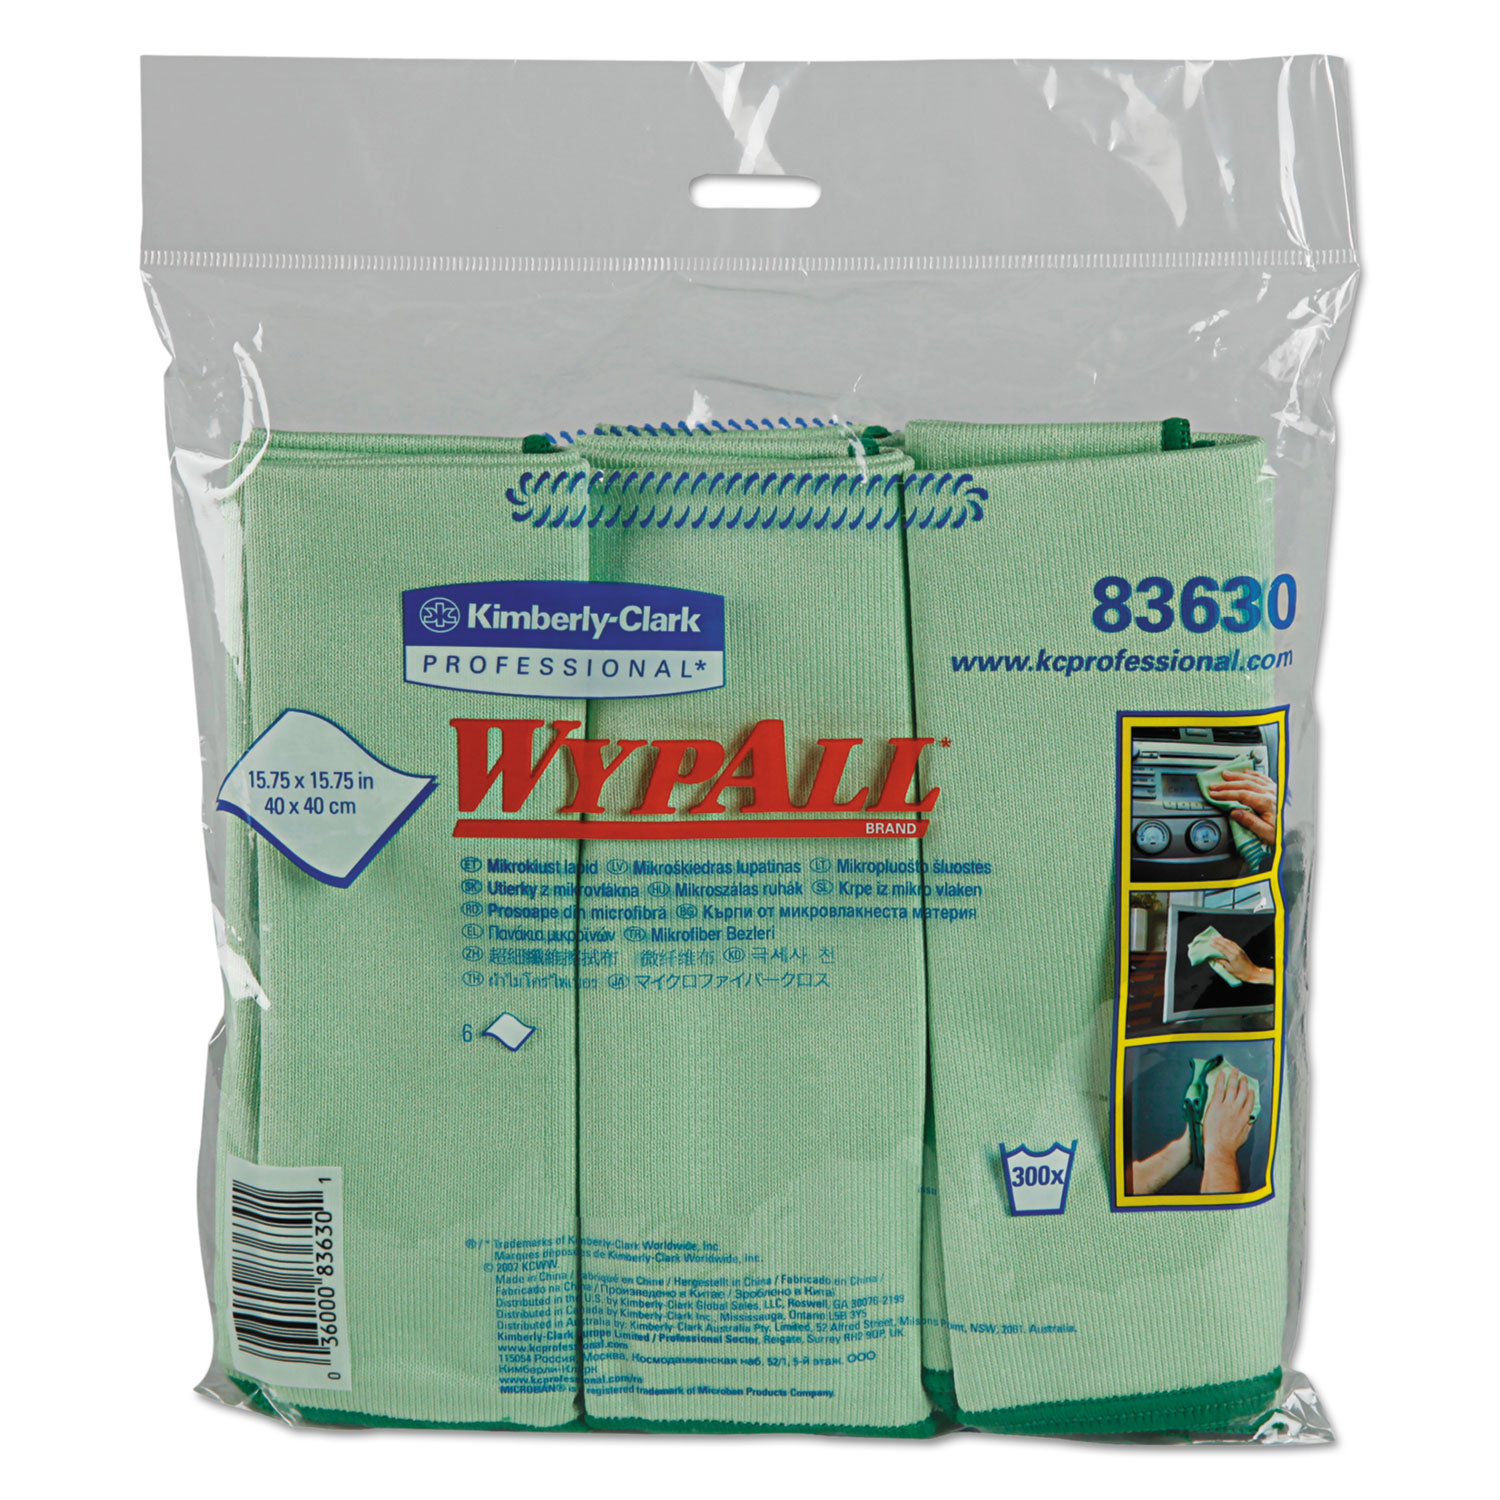  WypAll KCC 83630 Microfiber Cloths, Reusable, 15 3/4 x 15 3/4, Green, 24/Carton (KCC83630CT) 